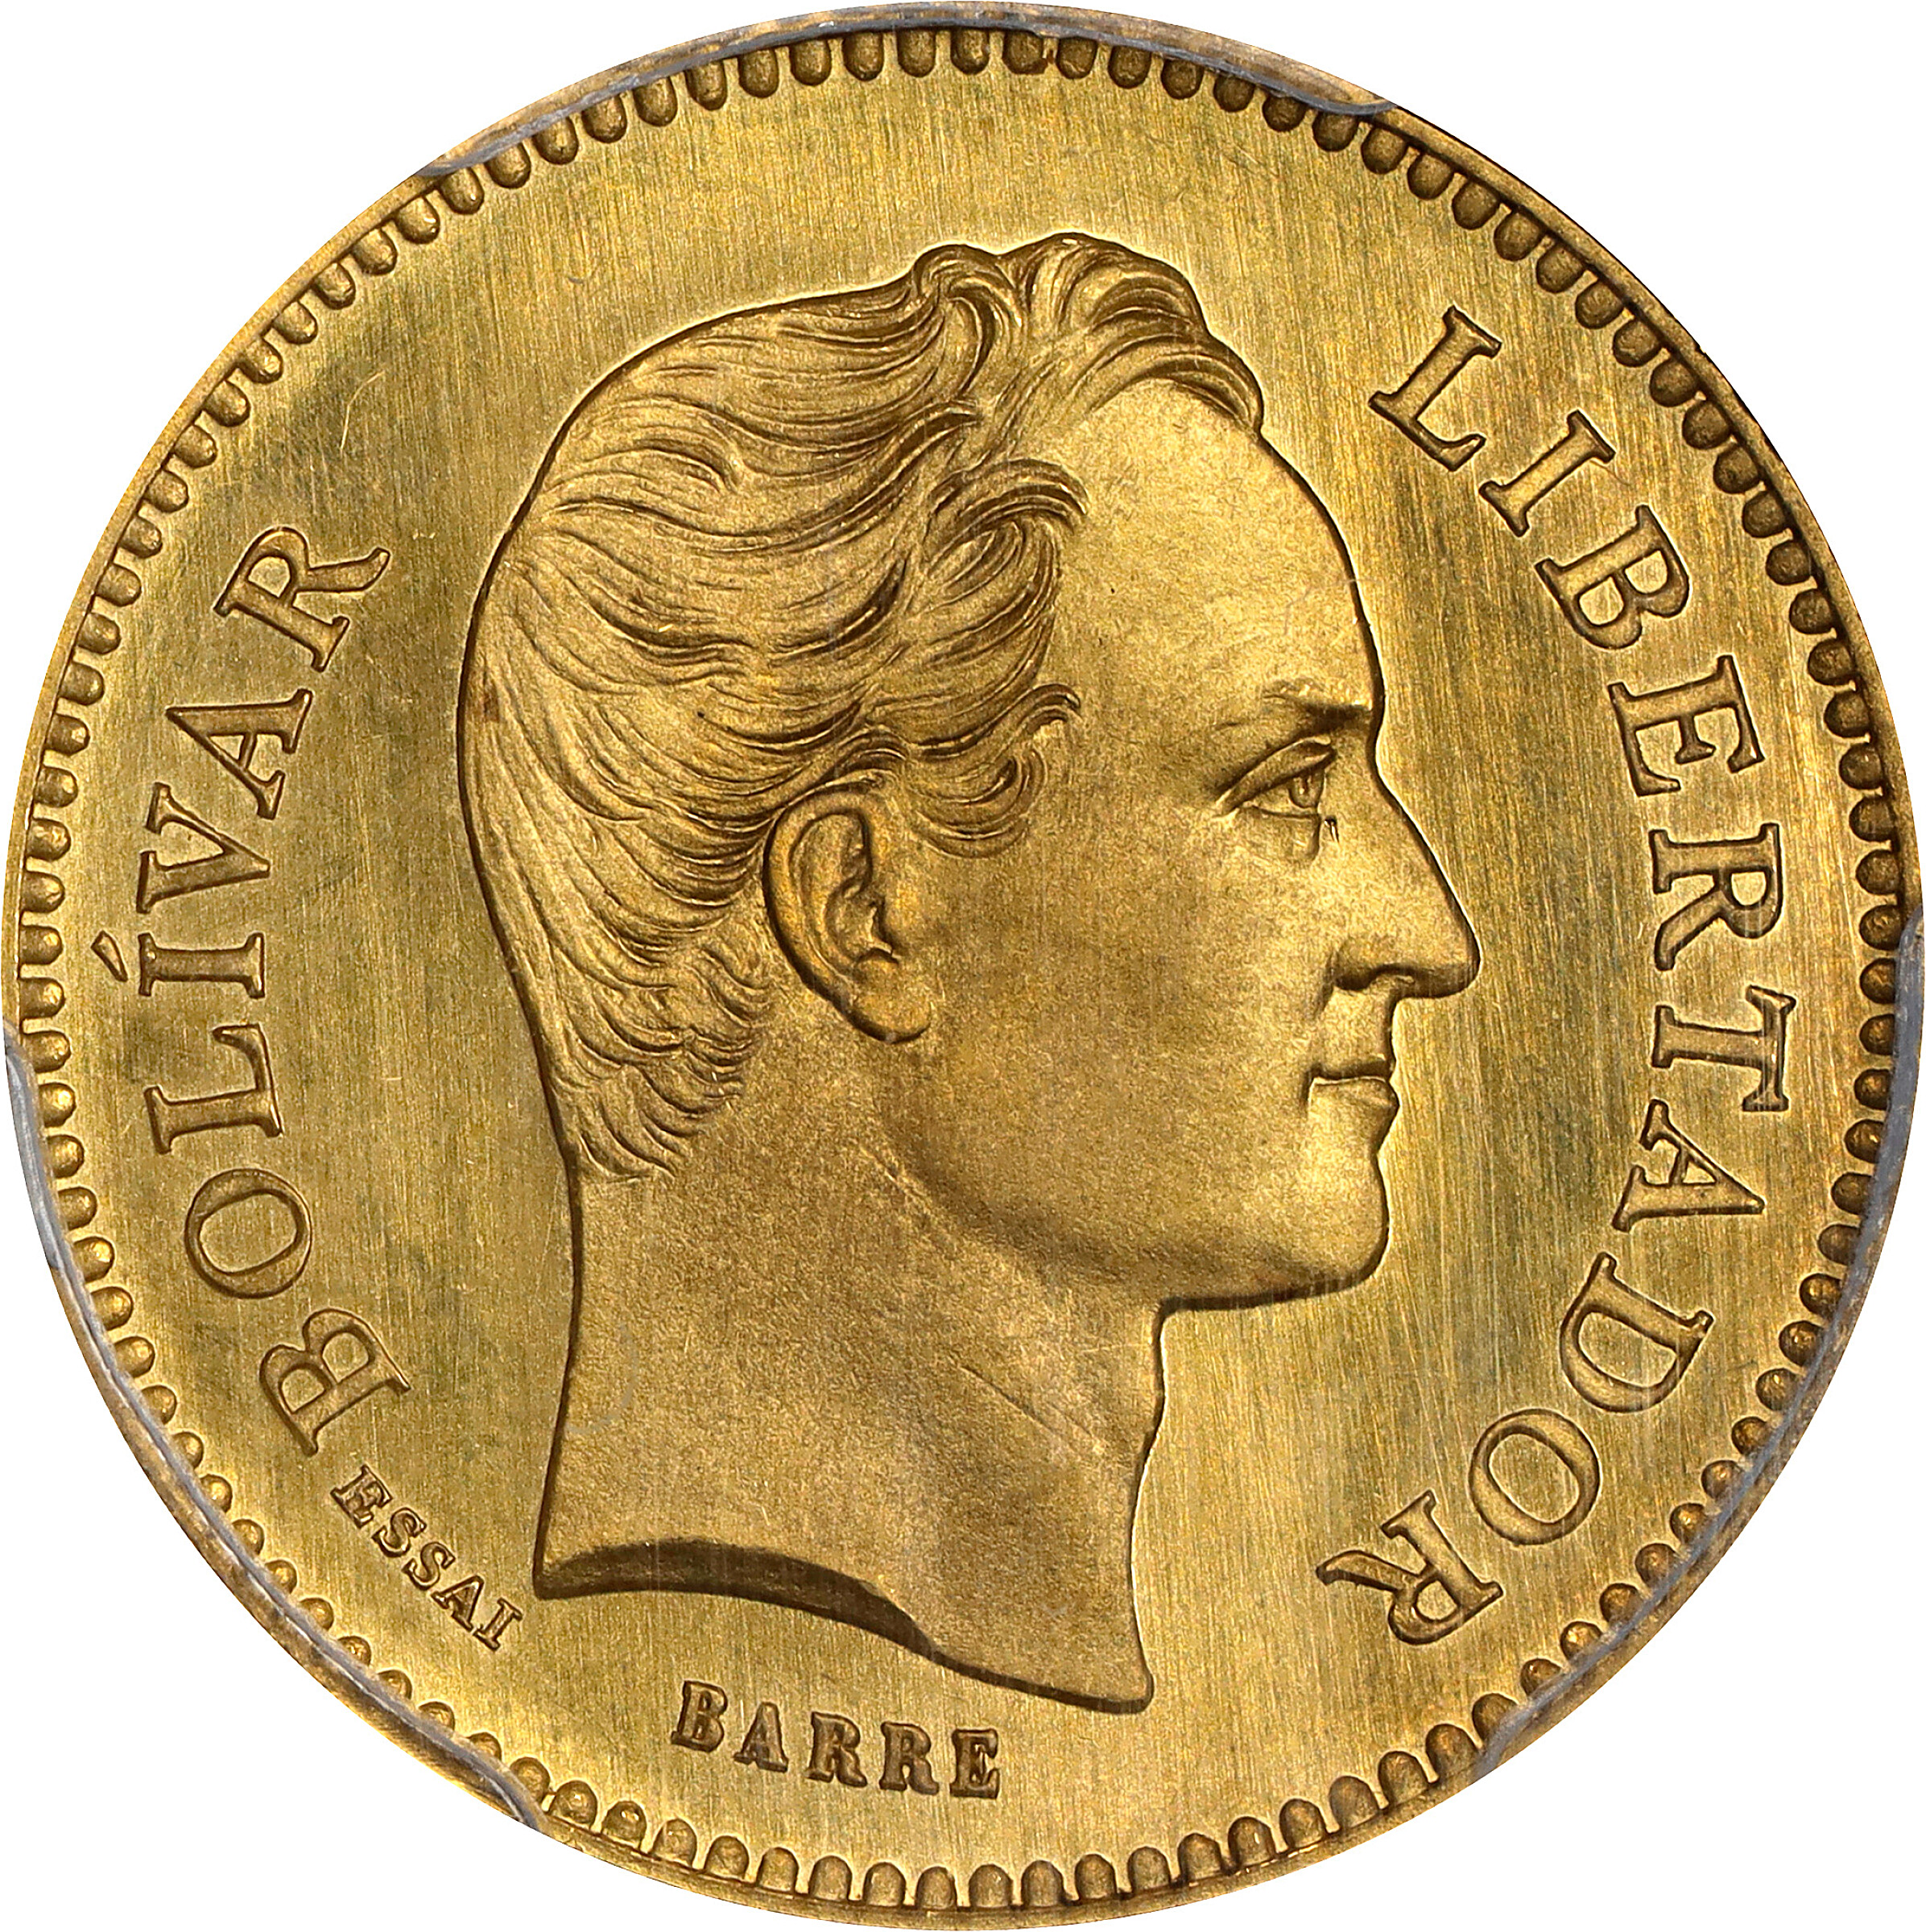 VENEZUELA. Gold 5 Venezolanos Essai (Pattern), 1875. Paris Mint 